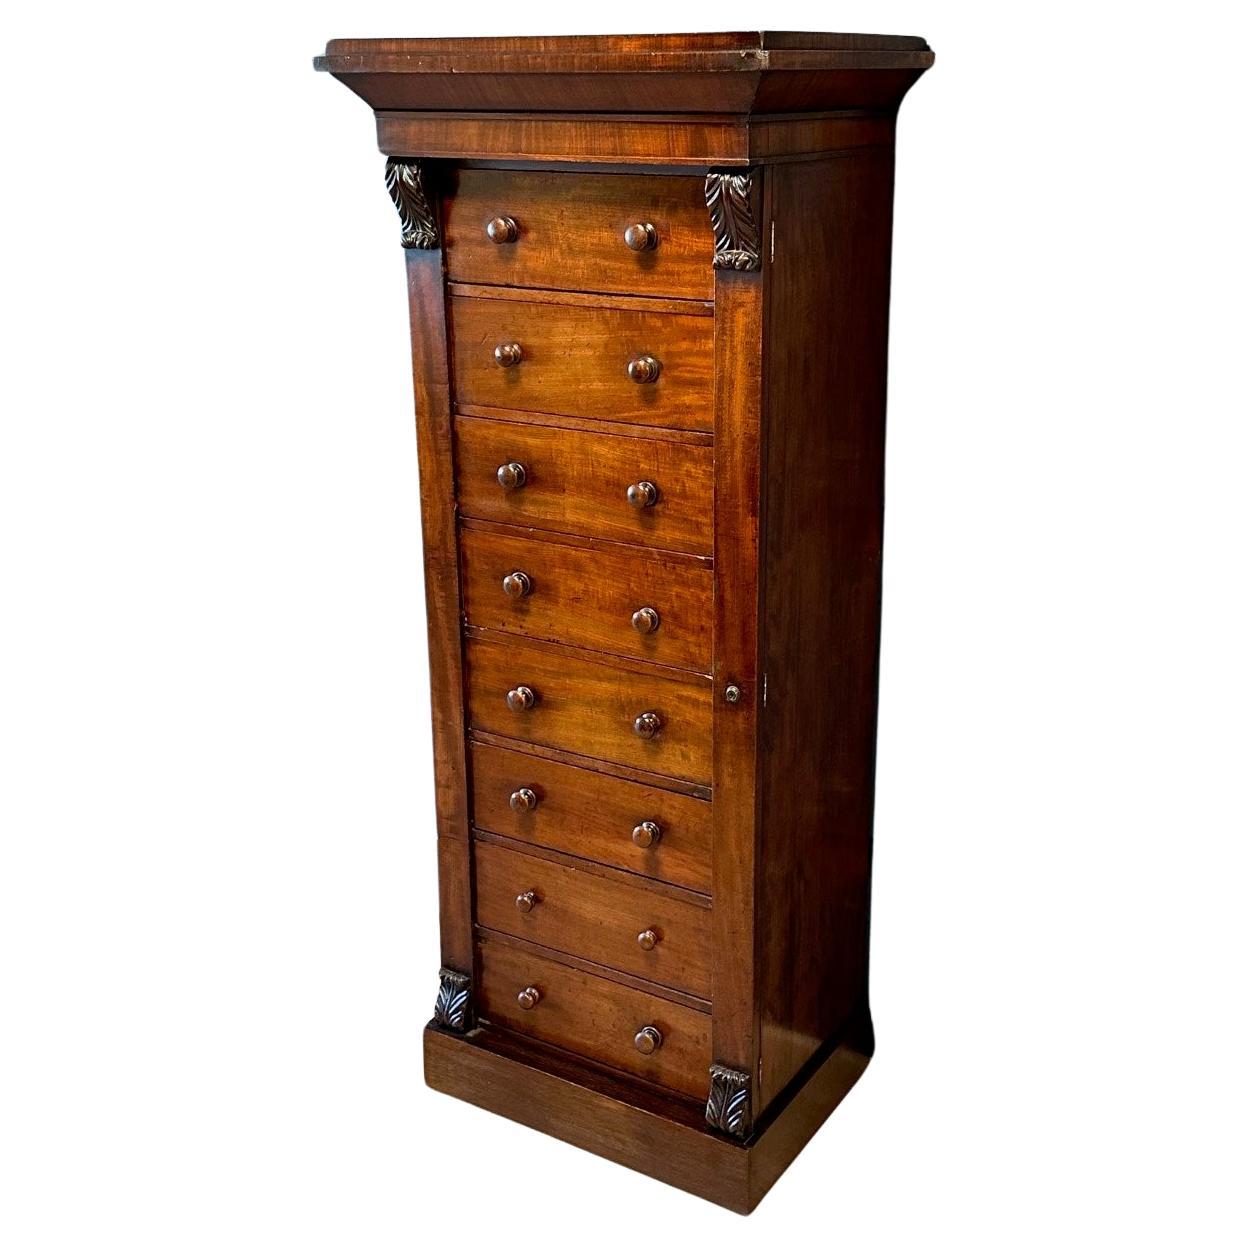 19th Century mahogany Wellington chest of drawers